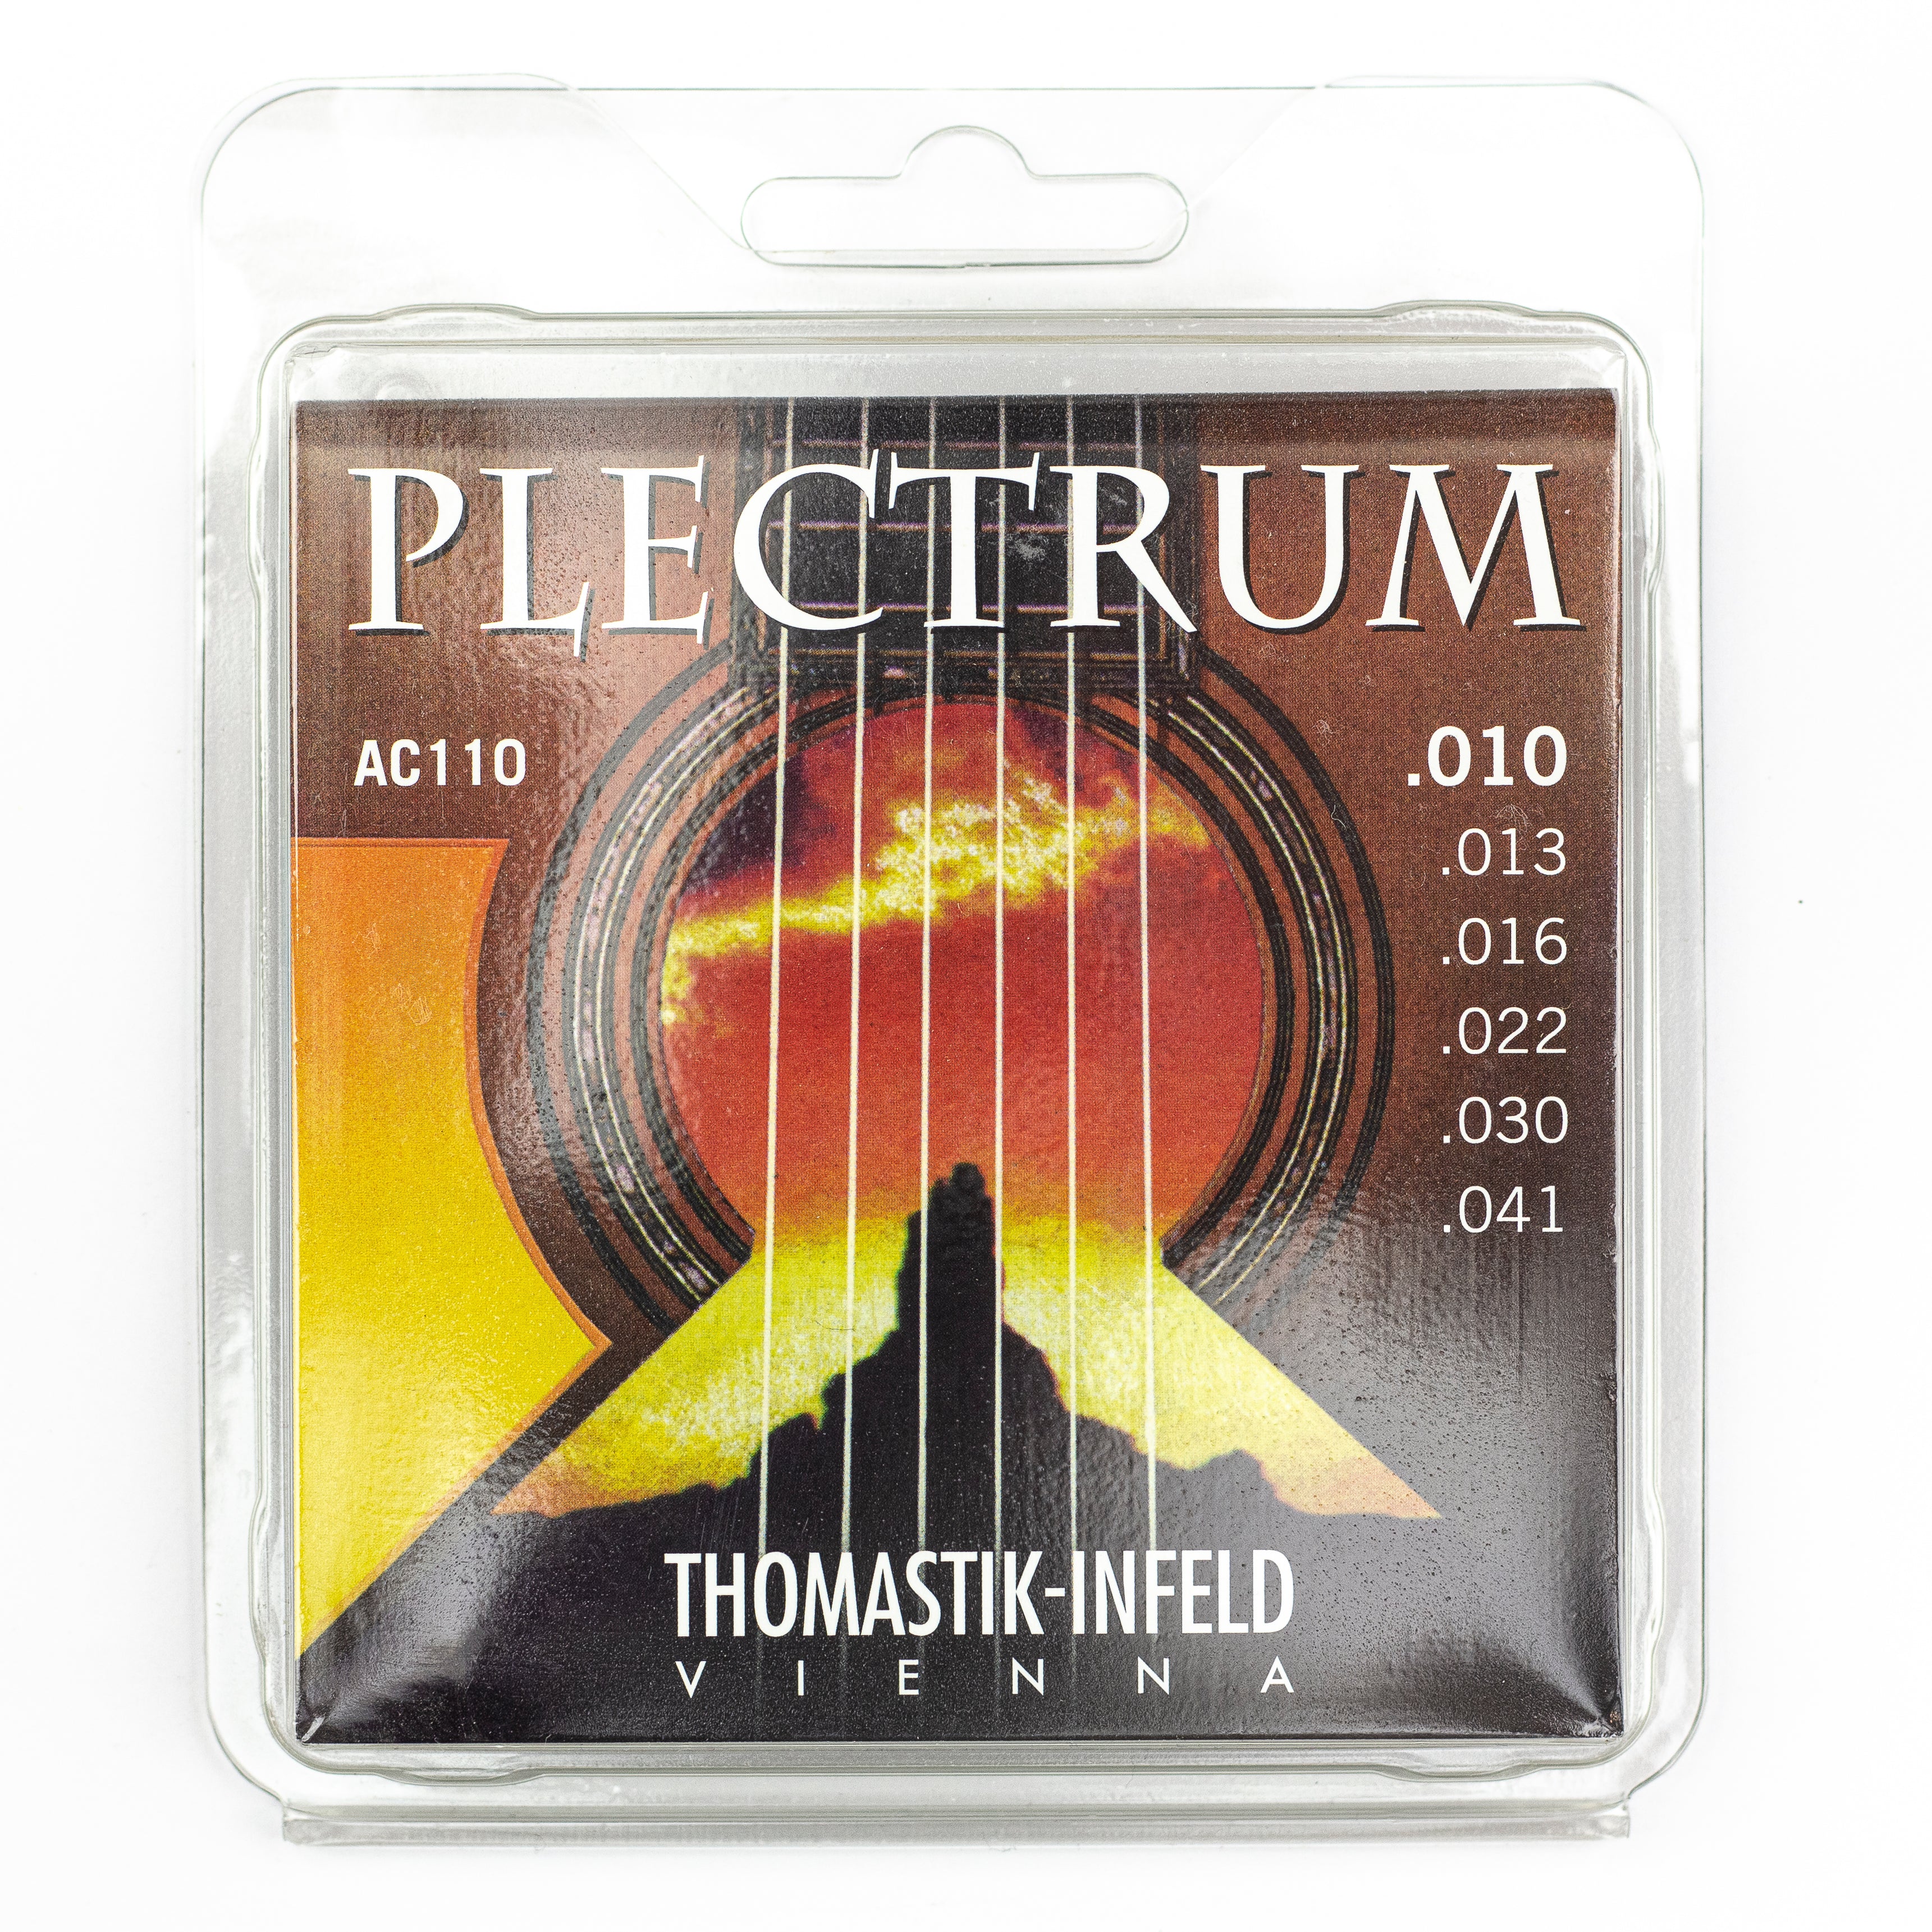 Thomastik-Infeld AC110 Plectrum Bronze 10-41 Acoustic Guitar Strings